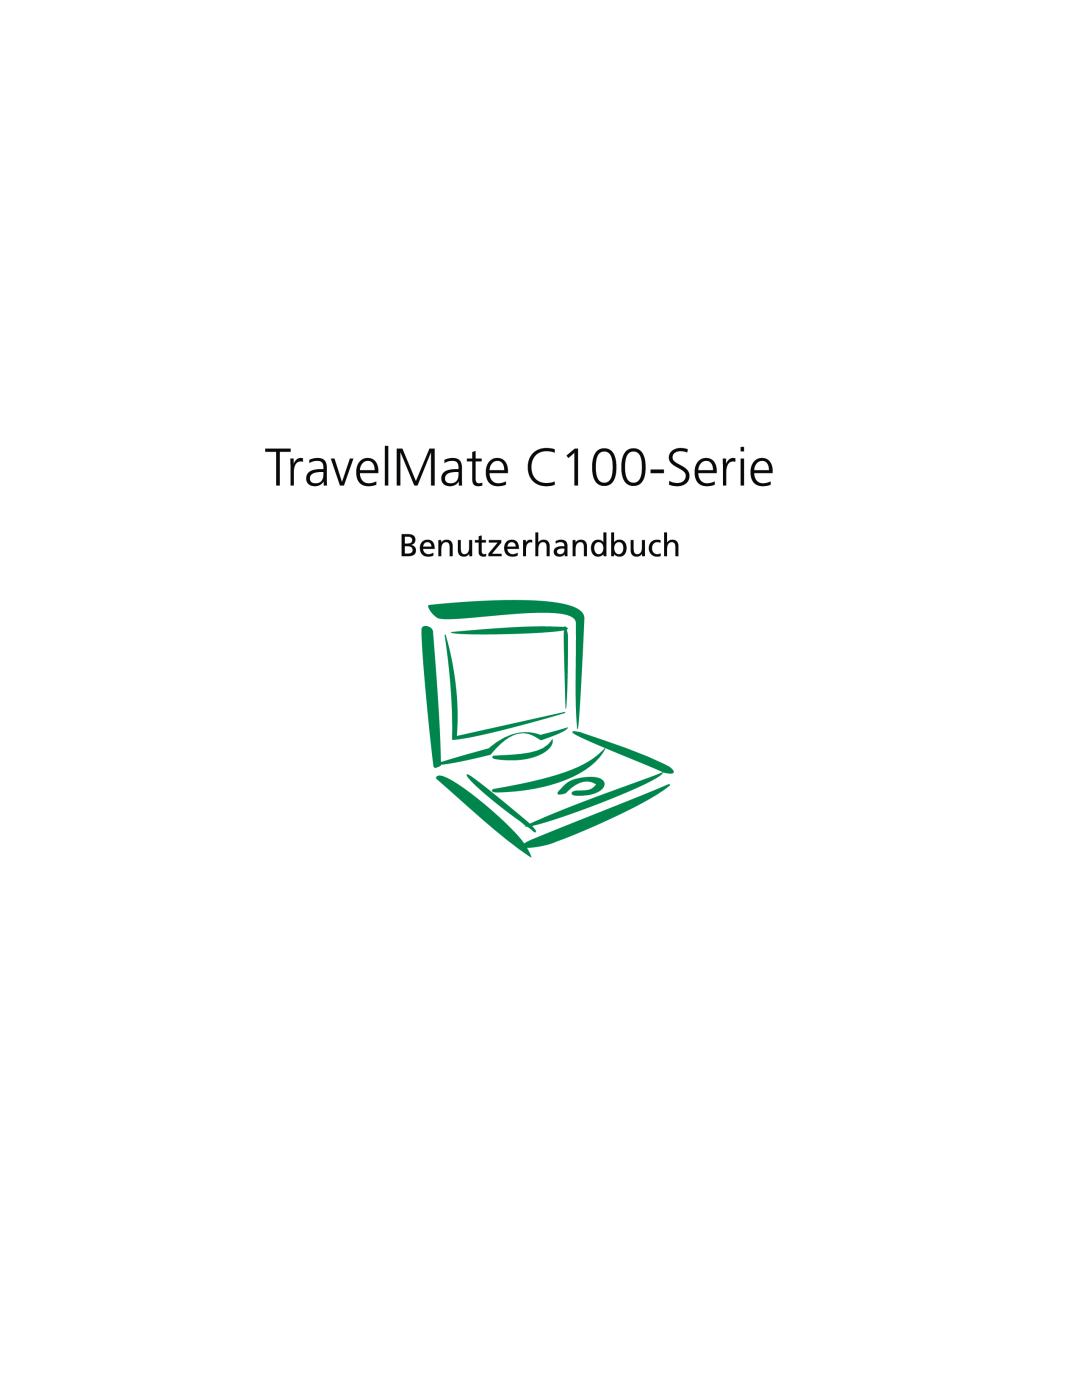 Acer C100-Series manual TravelMate C100-Serie, Benutzerhandbuch 